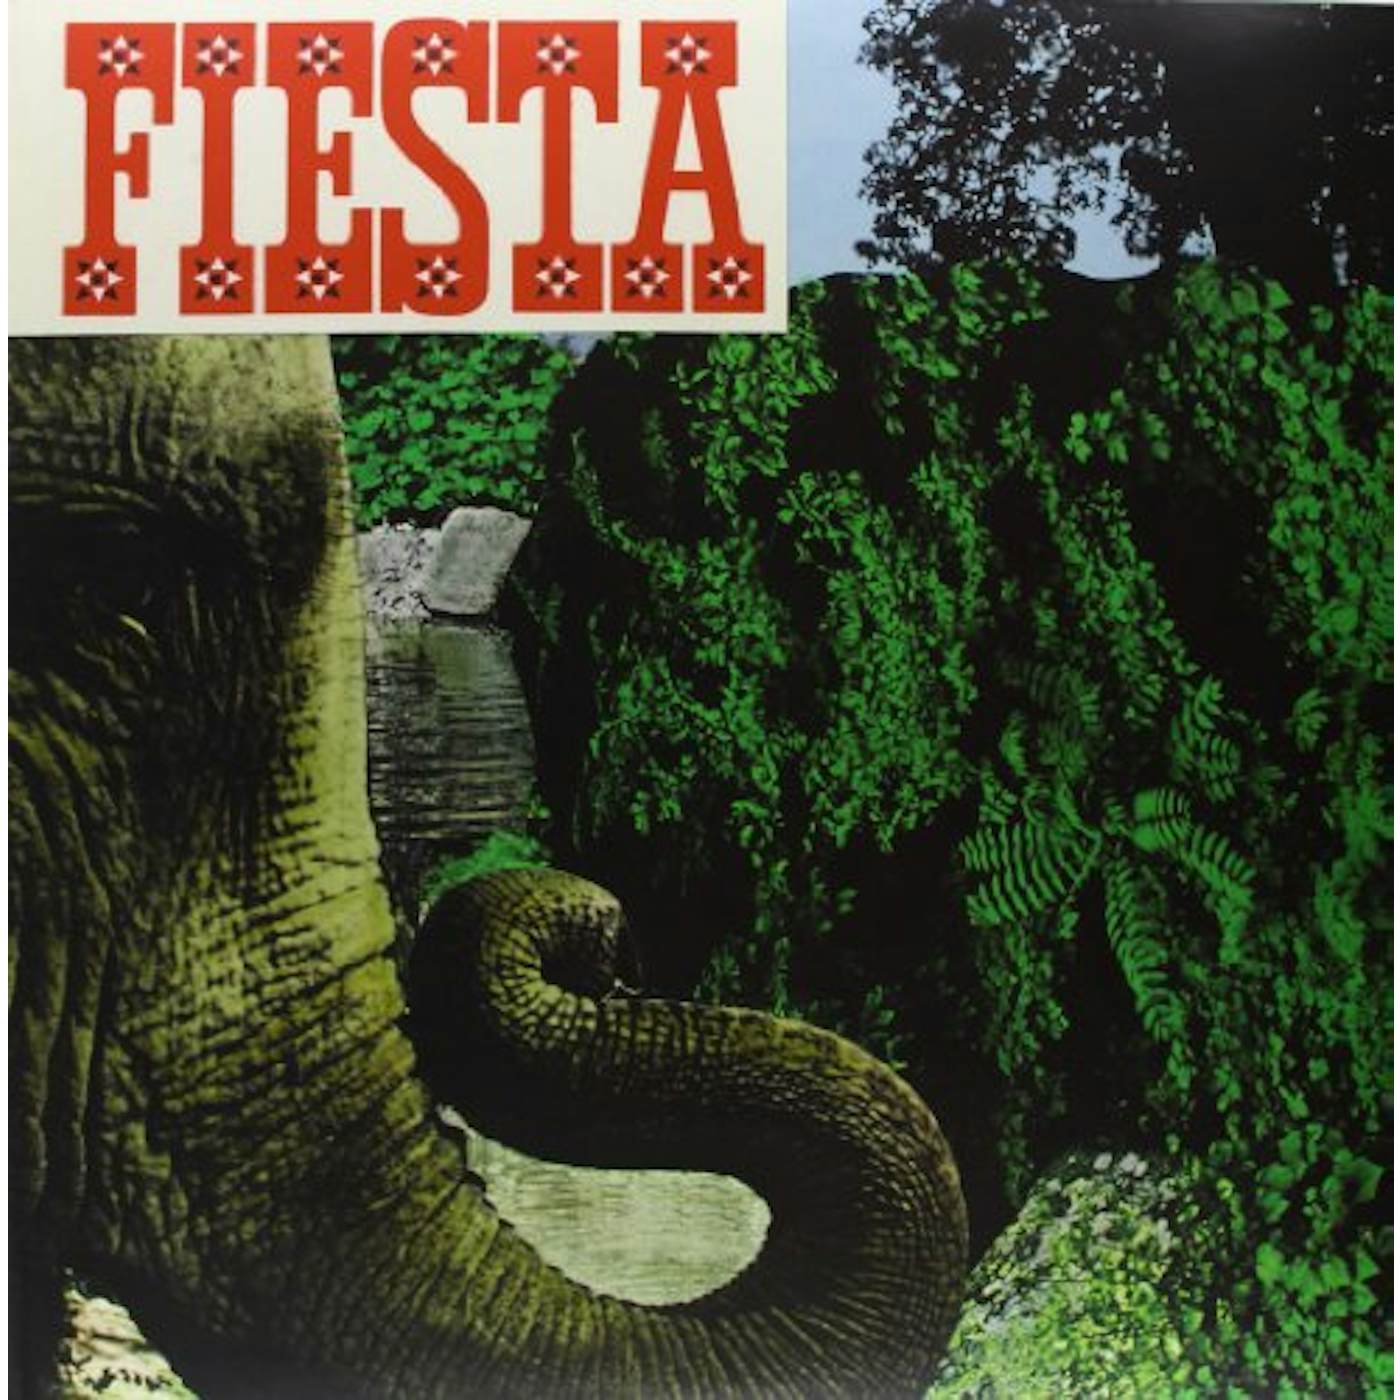 The Go Fiesta Vinyl Record